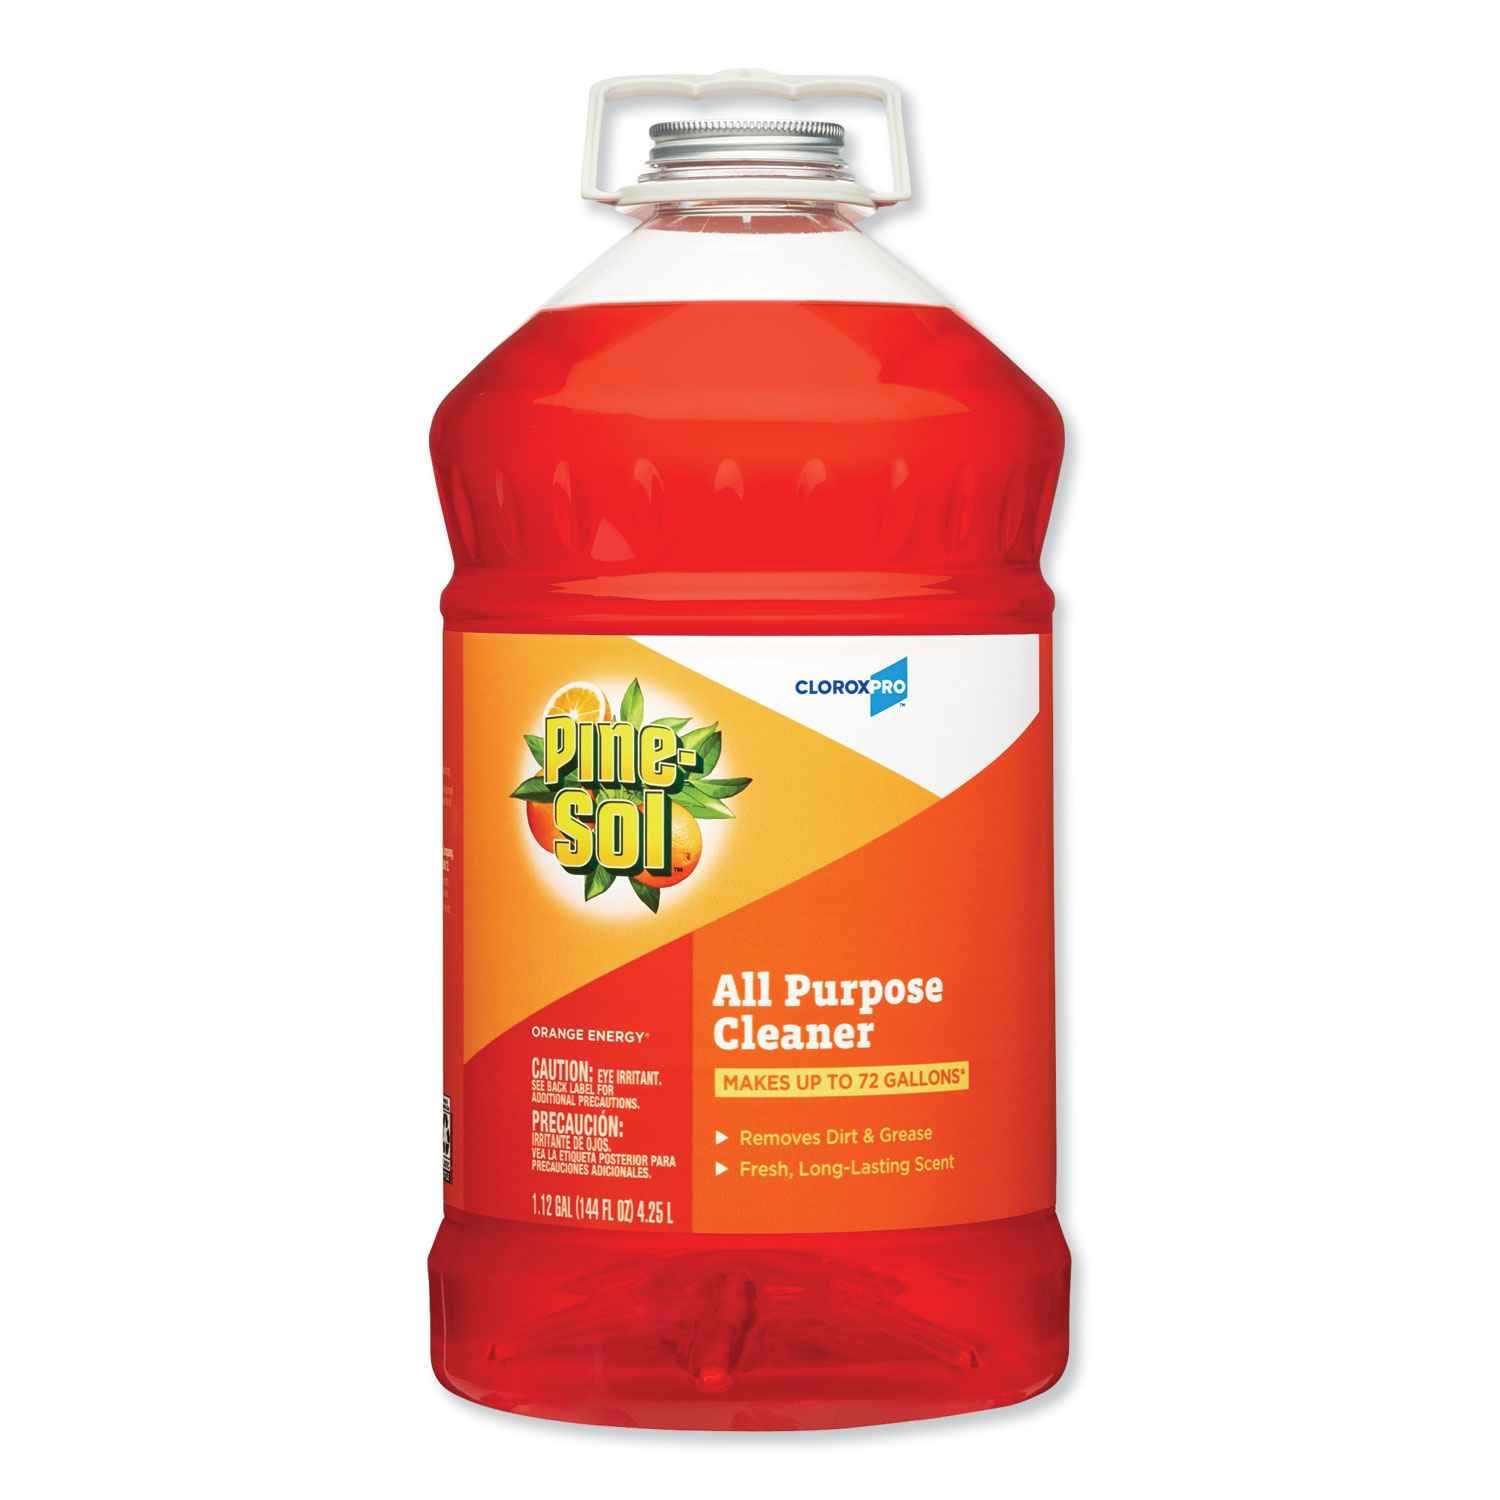  Pine-Sol 41772 All Purpose Cleaner, Orange Energy, 144 oz Bottle (CLO41772EA) 